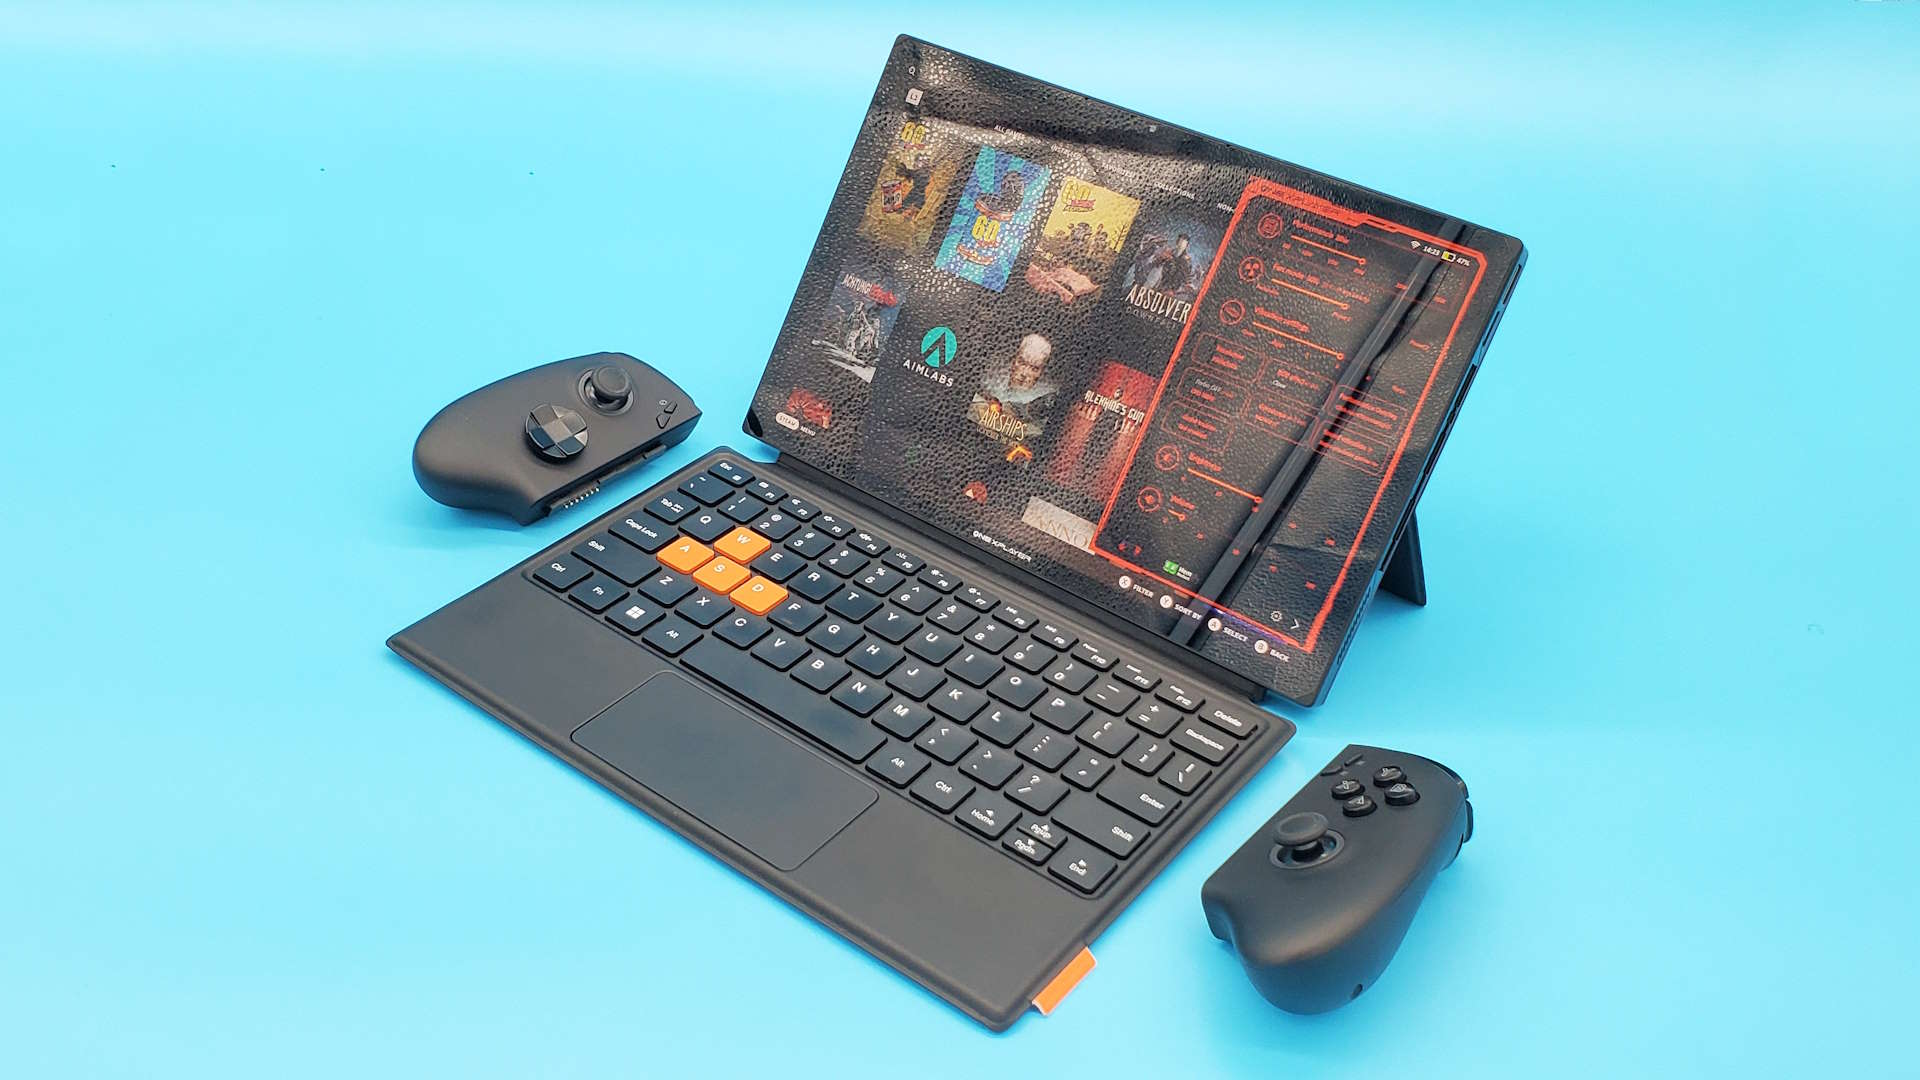 OneXPlayer X1 handheld gaming PC